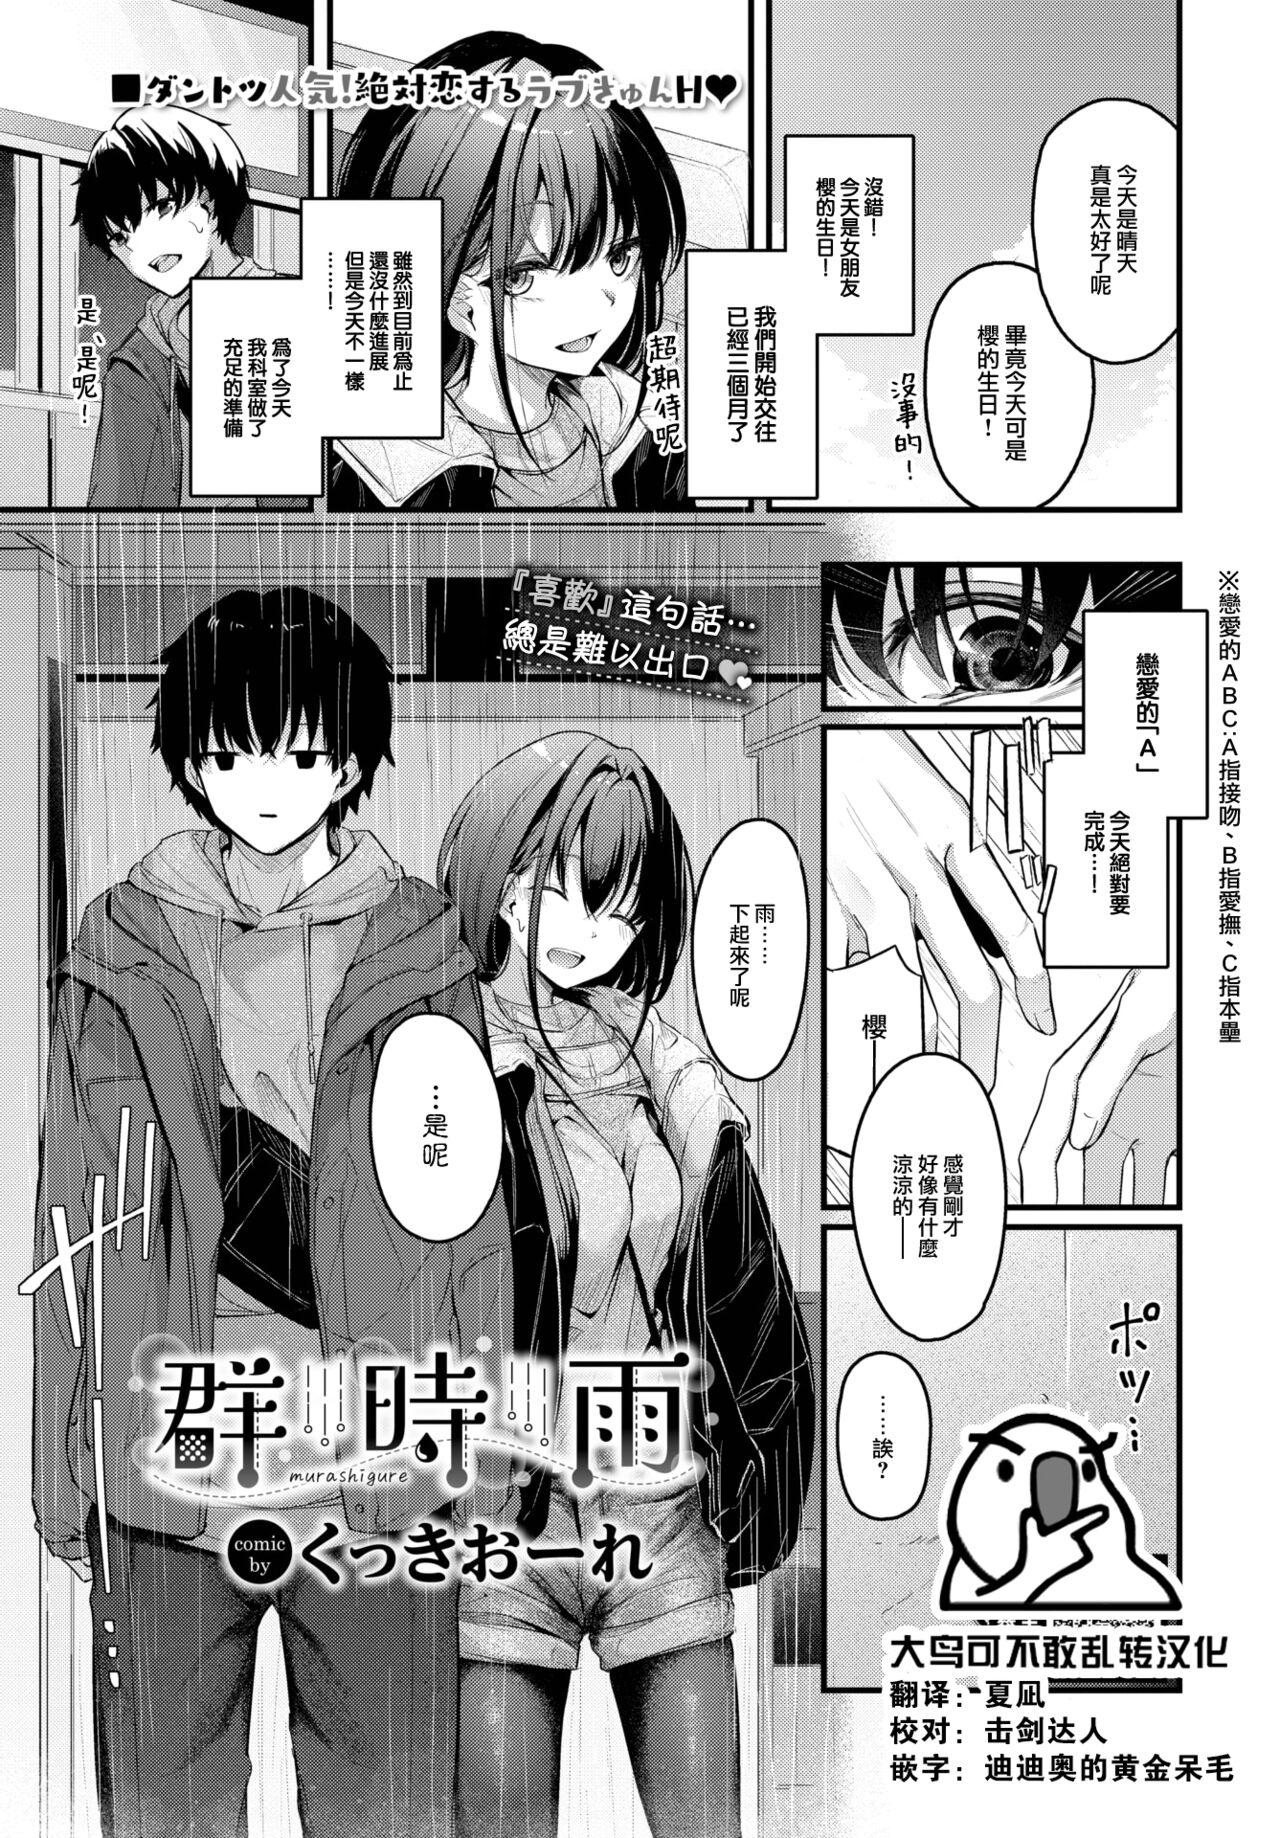 Licking Murashigure Com - Page 1